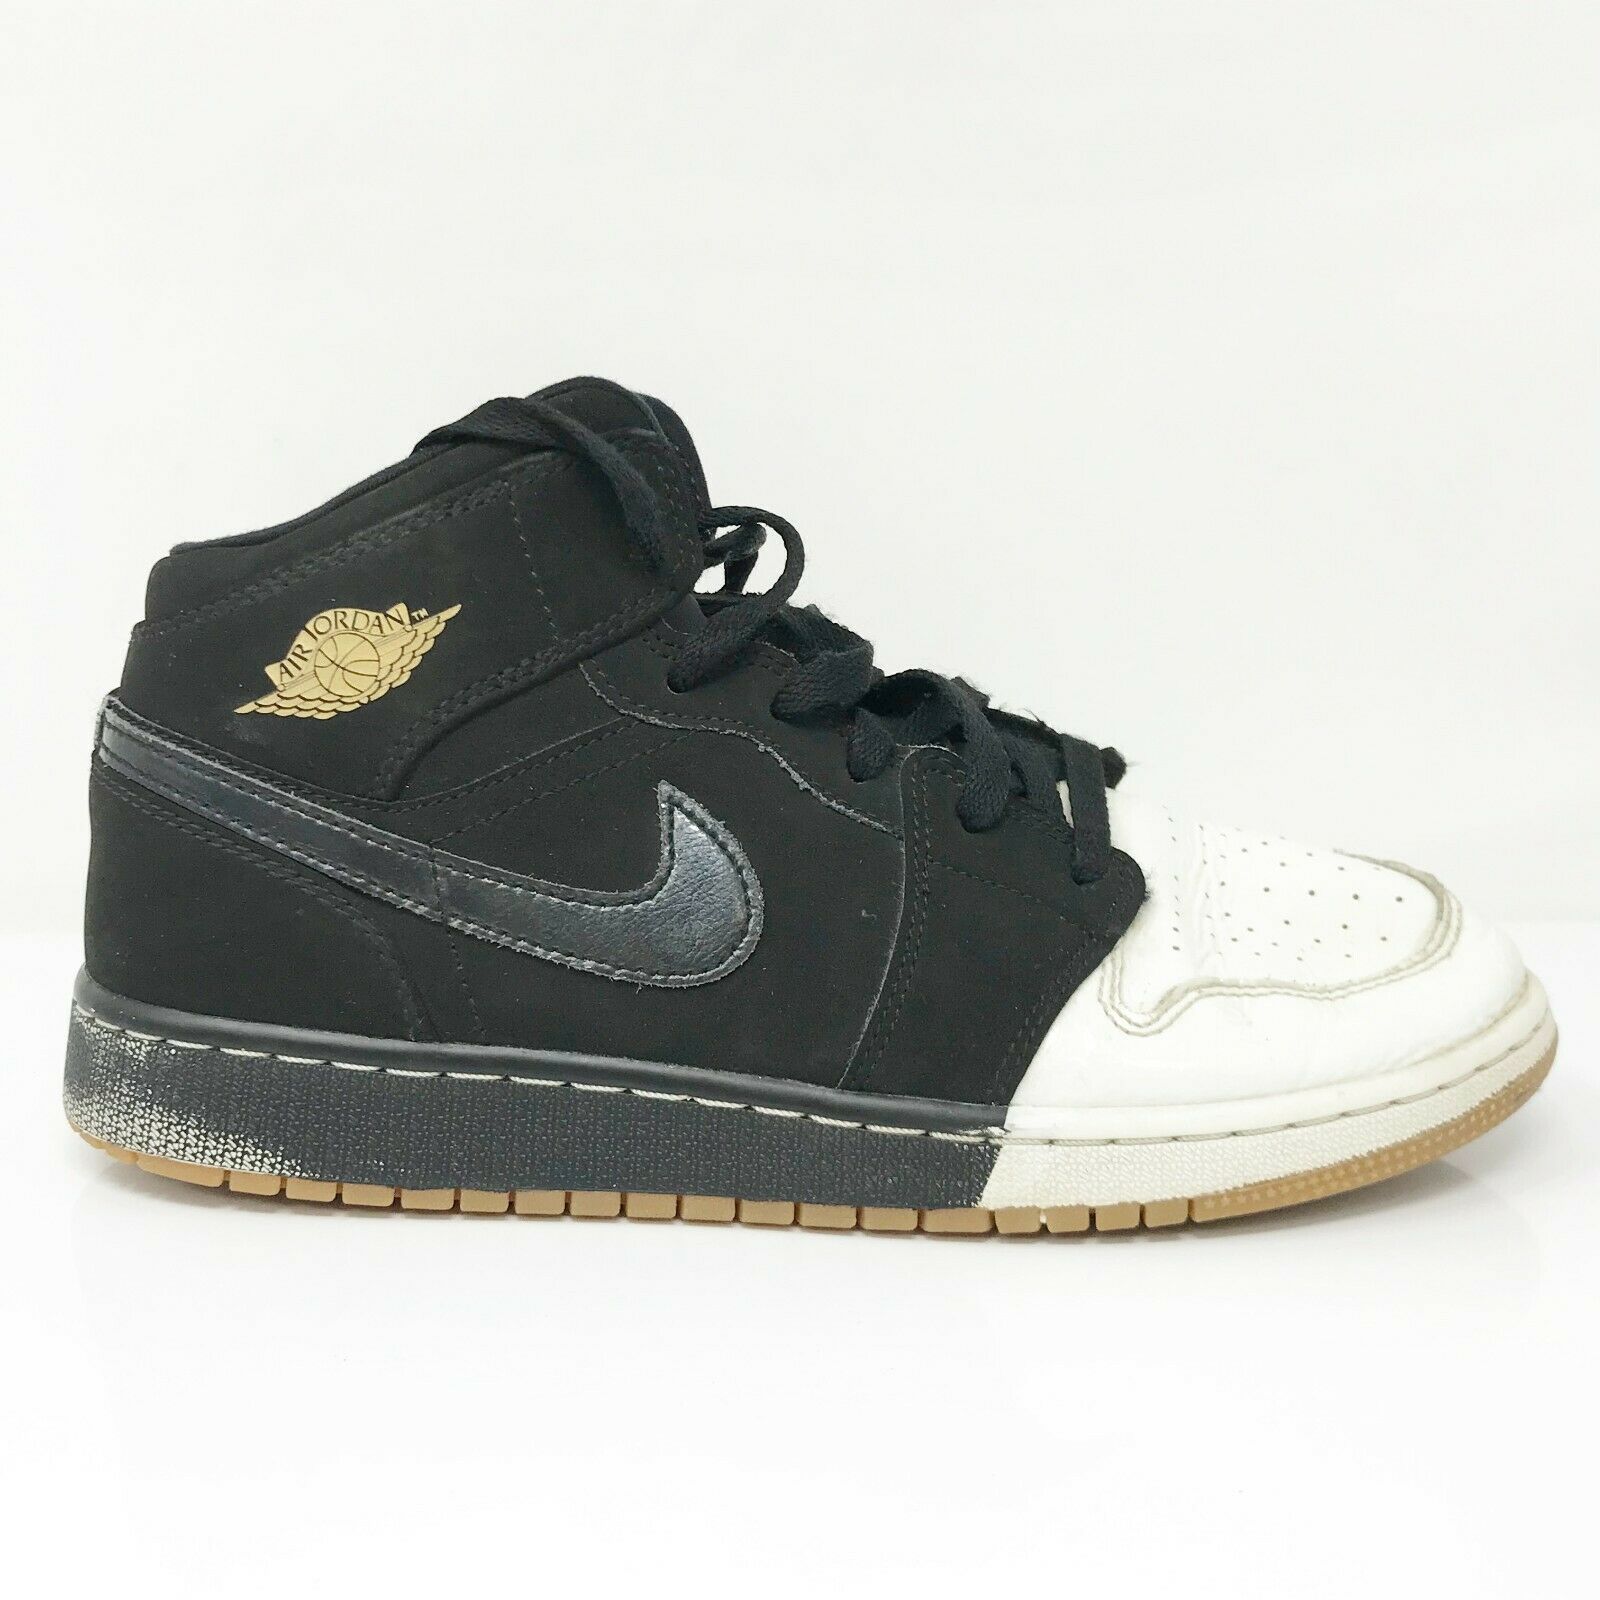 Nike Boys Air Jordan 1 Mid 555112-021 Black White Basketball Shoes Lace Up Sz 7Y